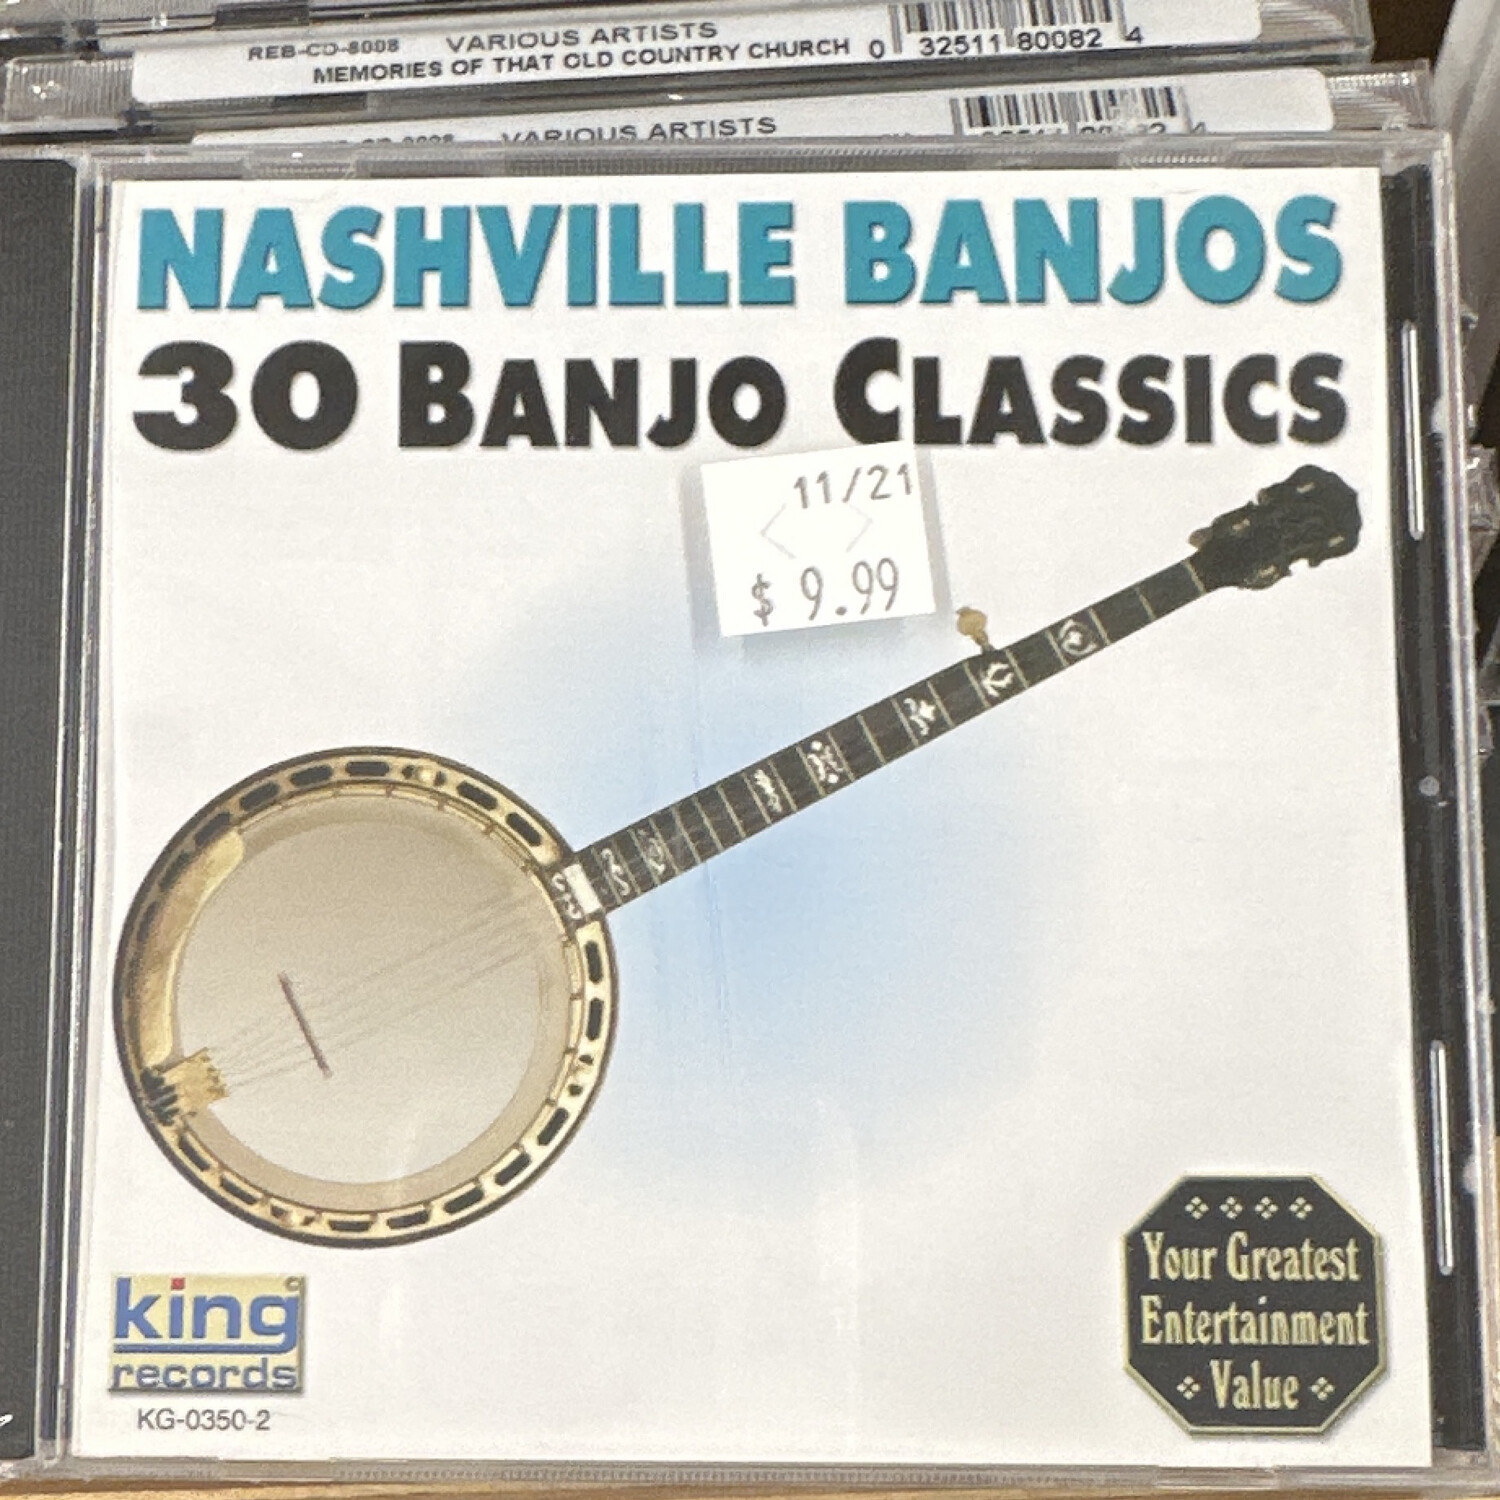 Nashville Banjos 30 Banjo Classics